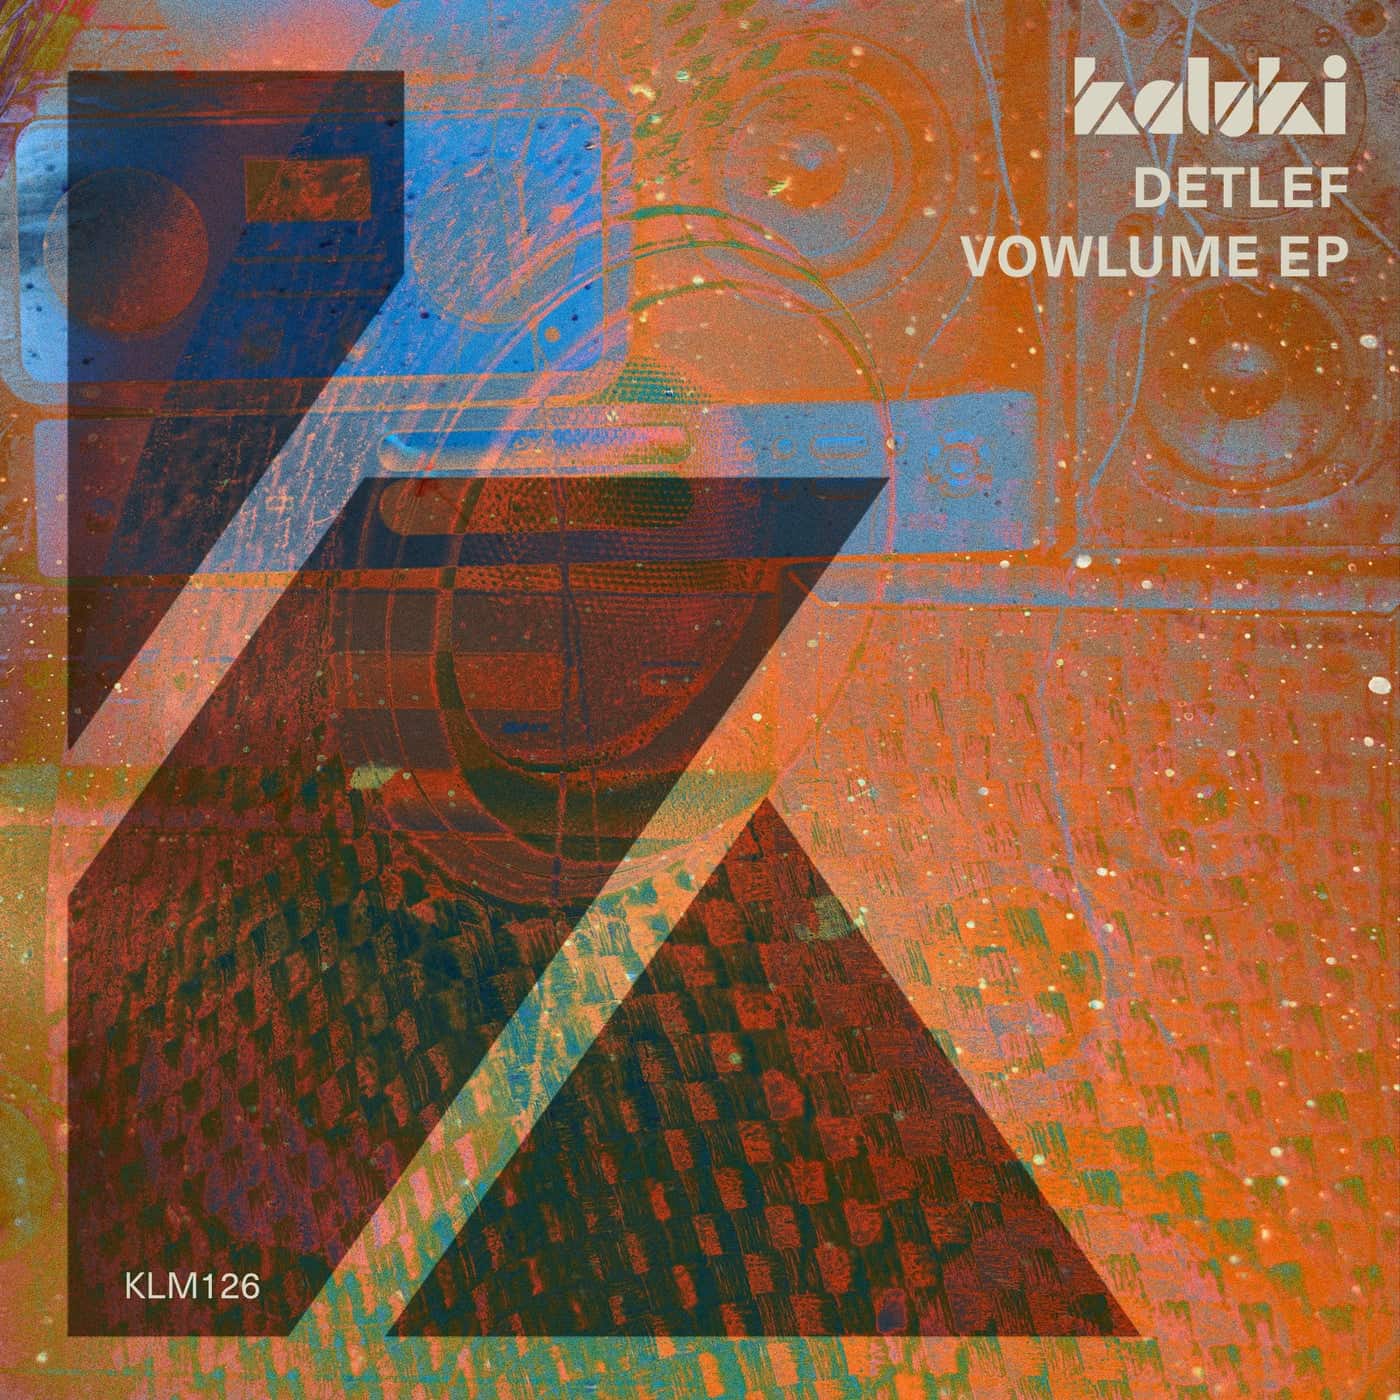 Download Detlef - Vowlume EP on Electrobuzz